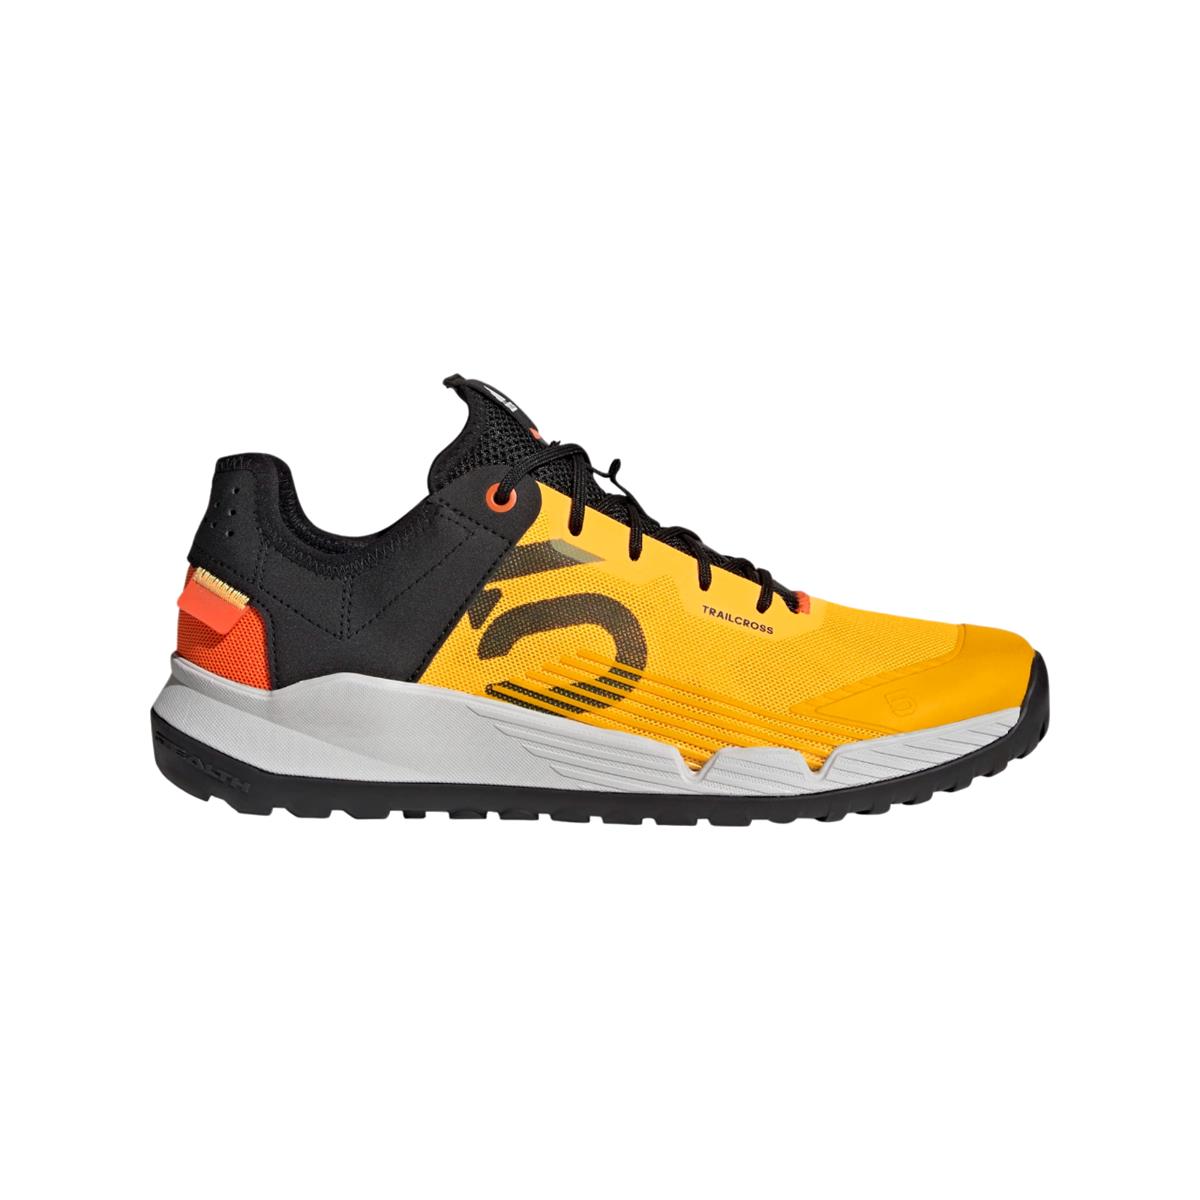 MTB Flat Shoes 5.10 Trailcross LT Black/Orange Size 42.5